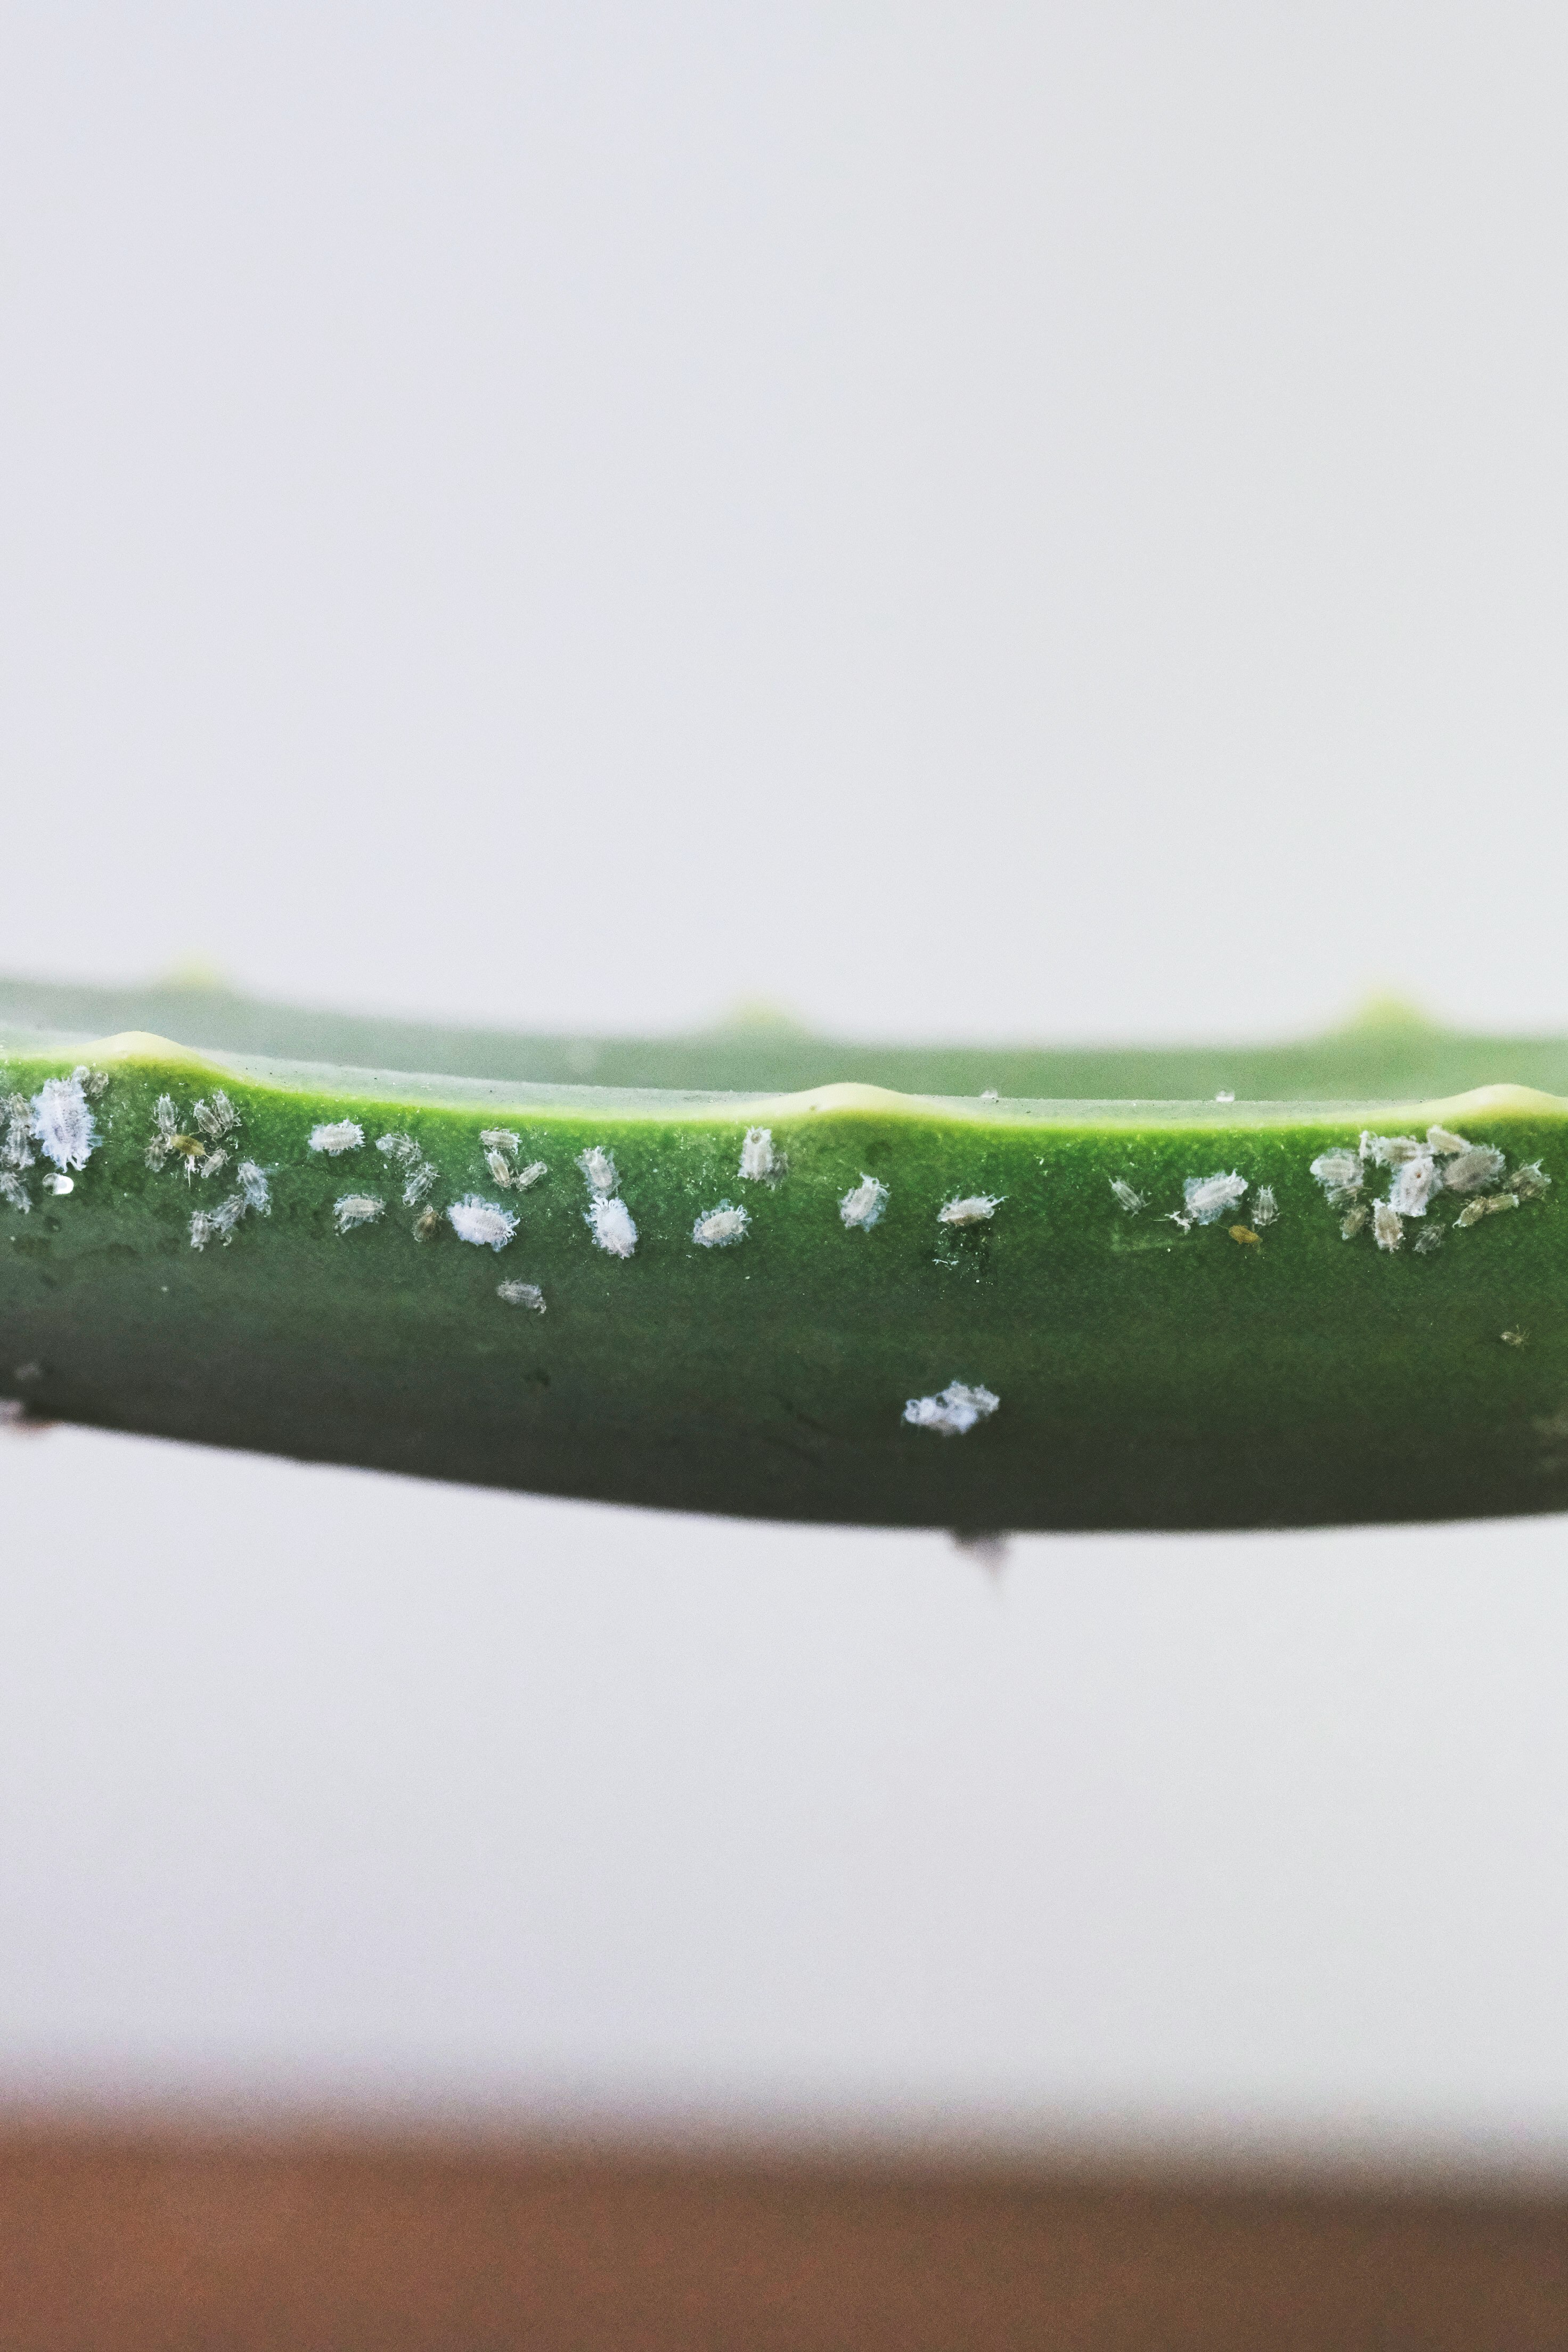 Mealy bugs on a aloe vera plant